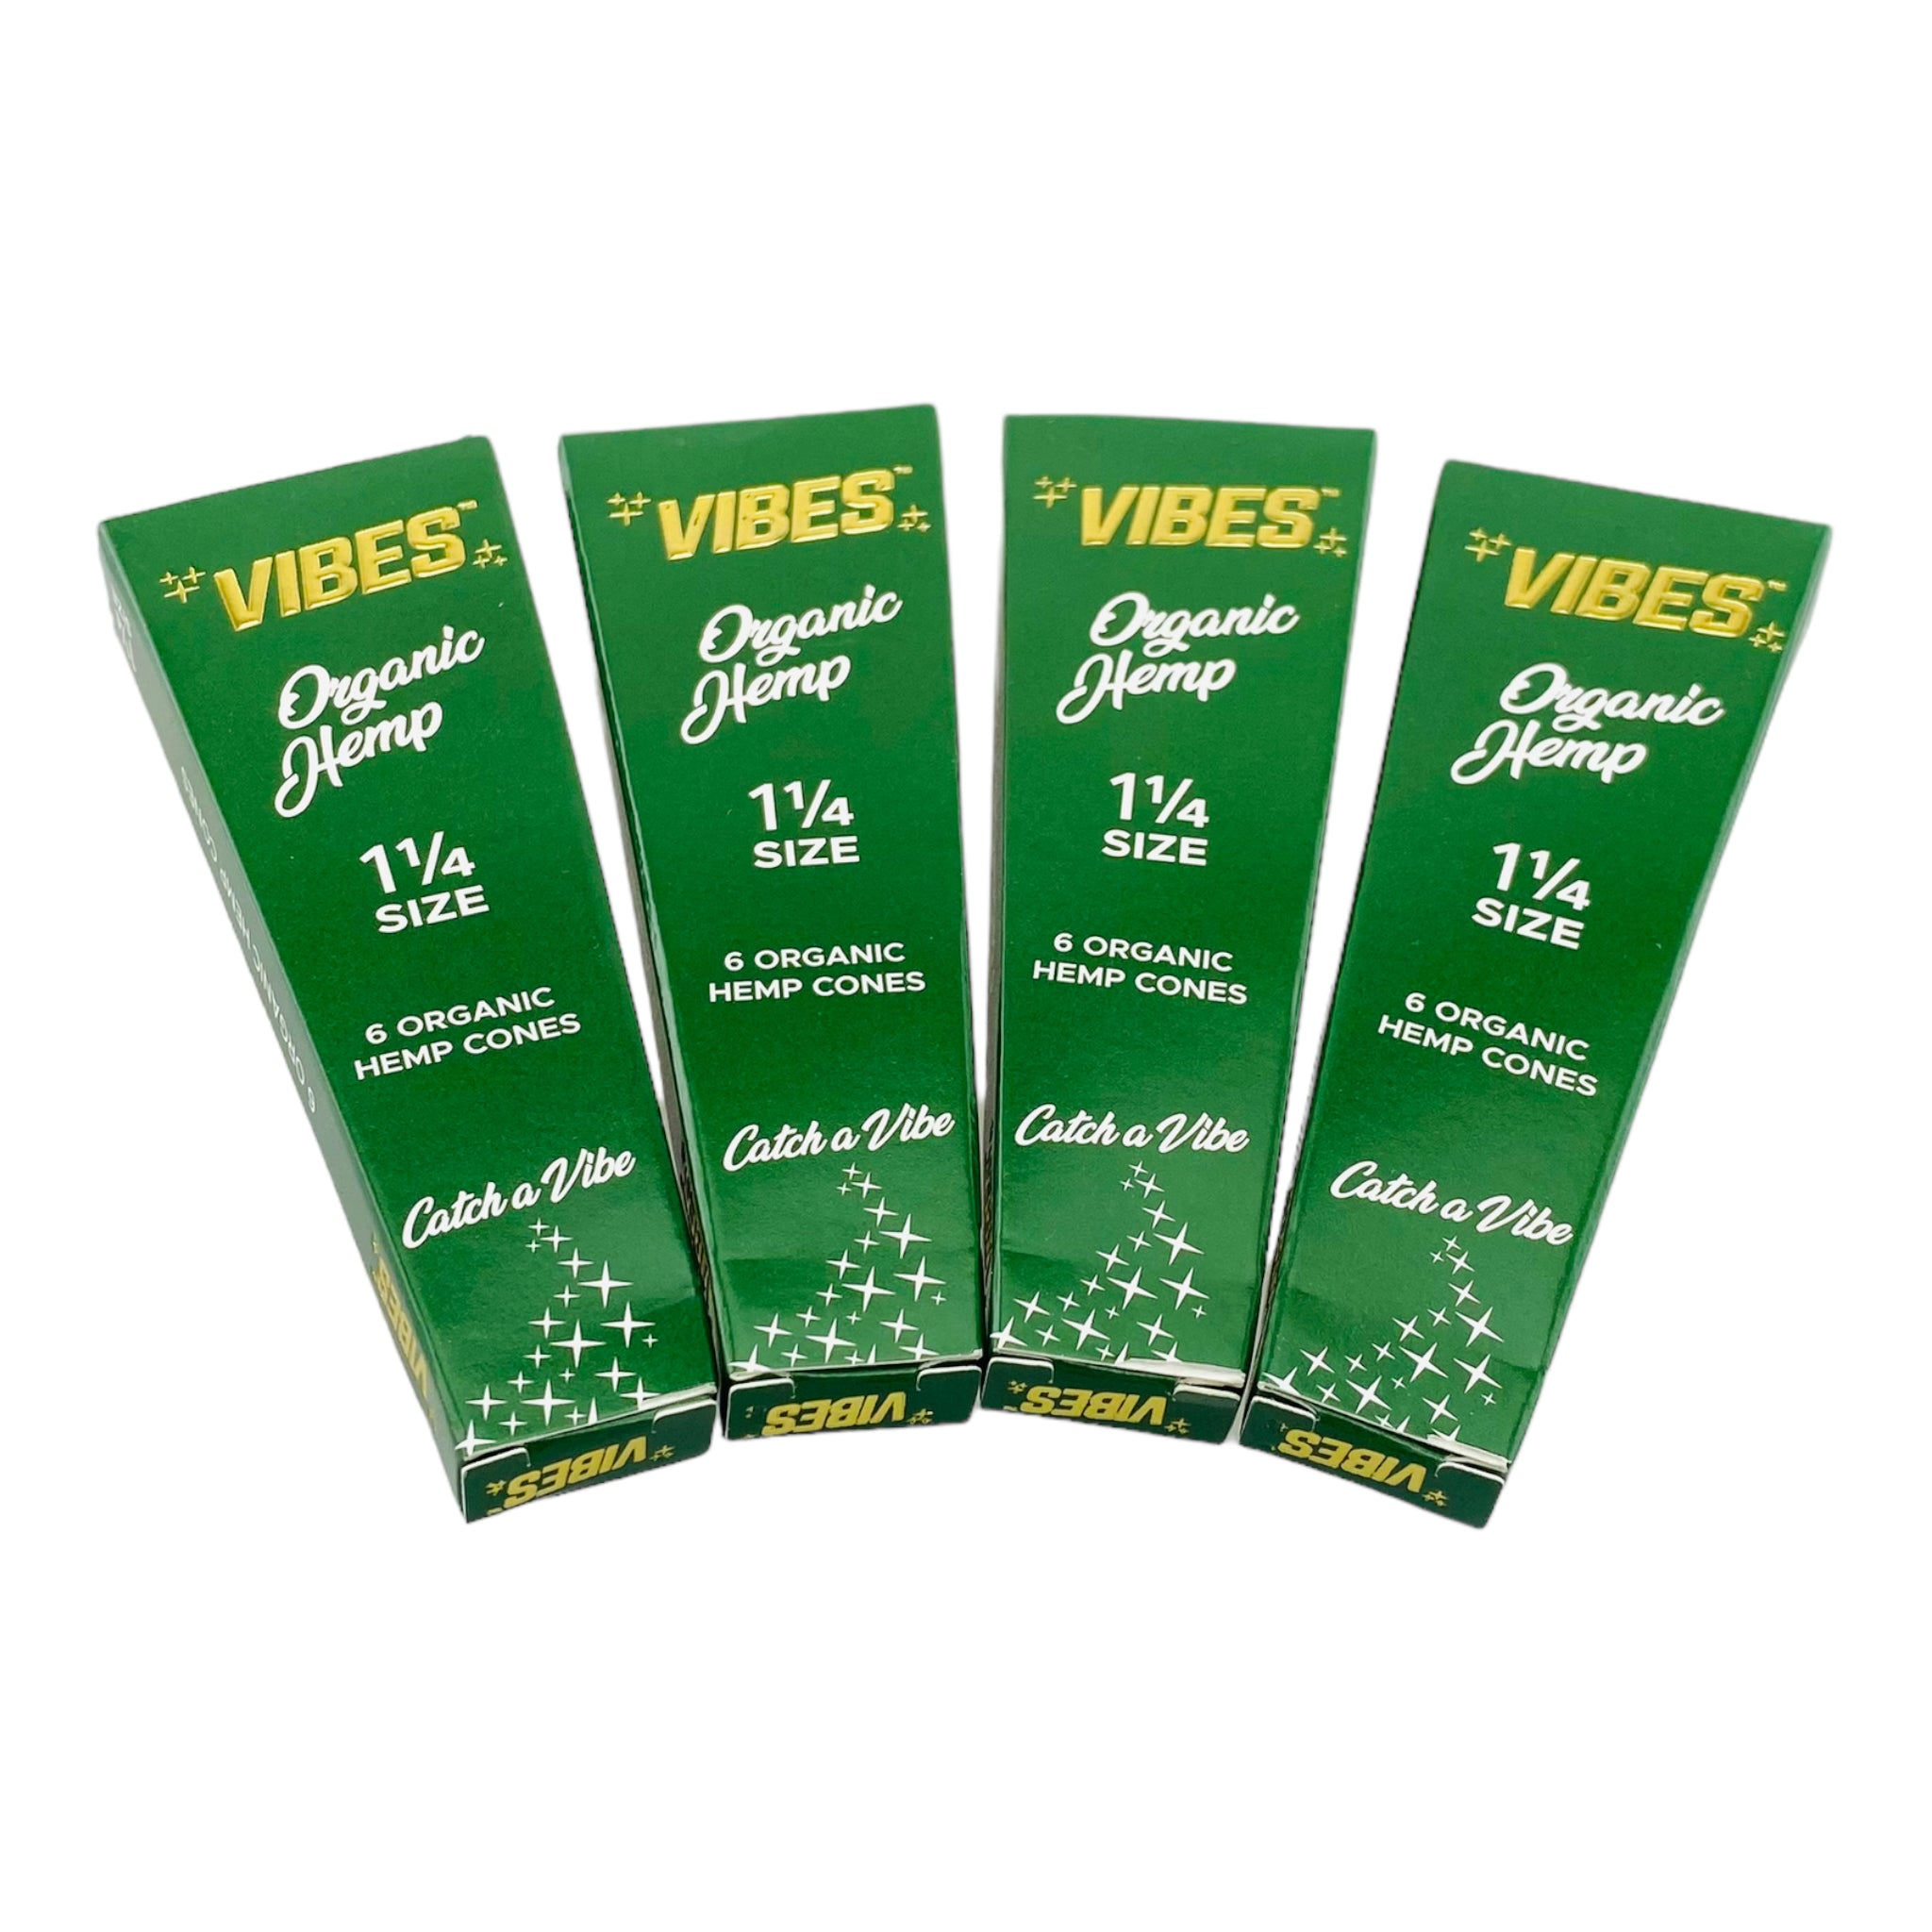 VIBES Organic Hemp 1-1/4 Cones - 4 Packs